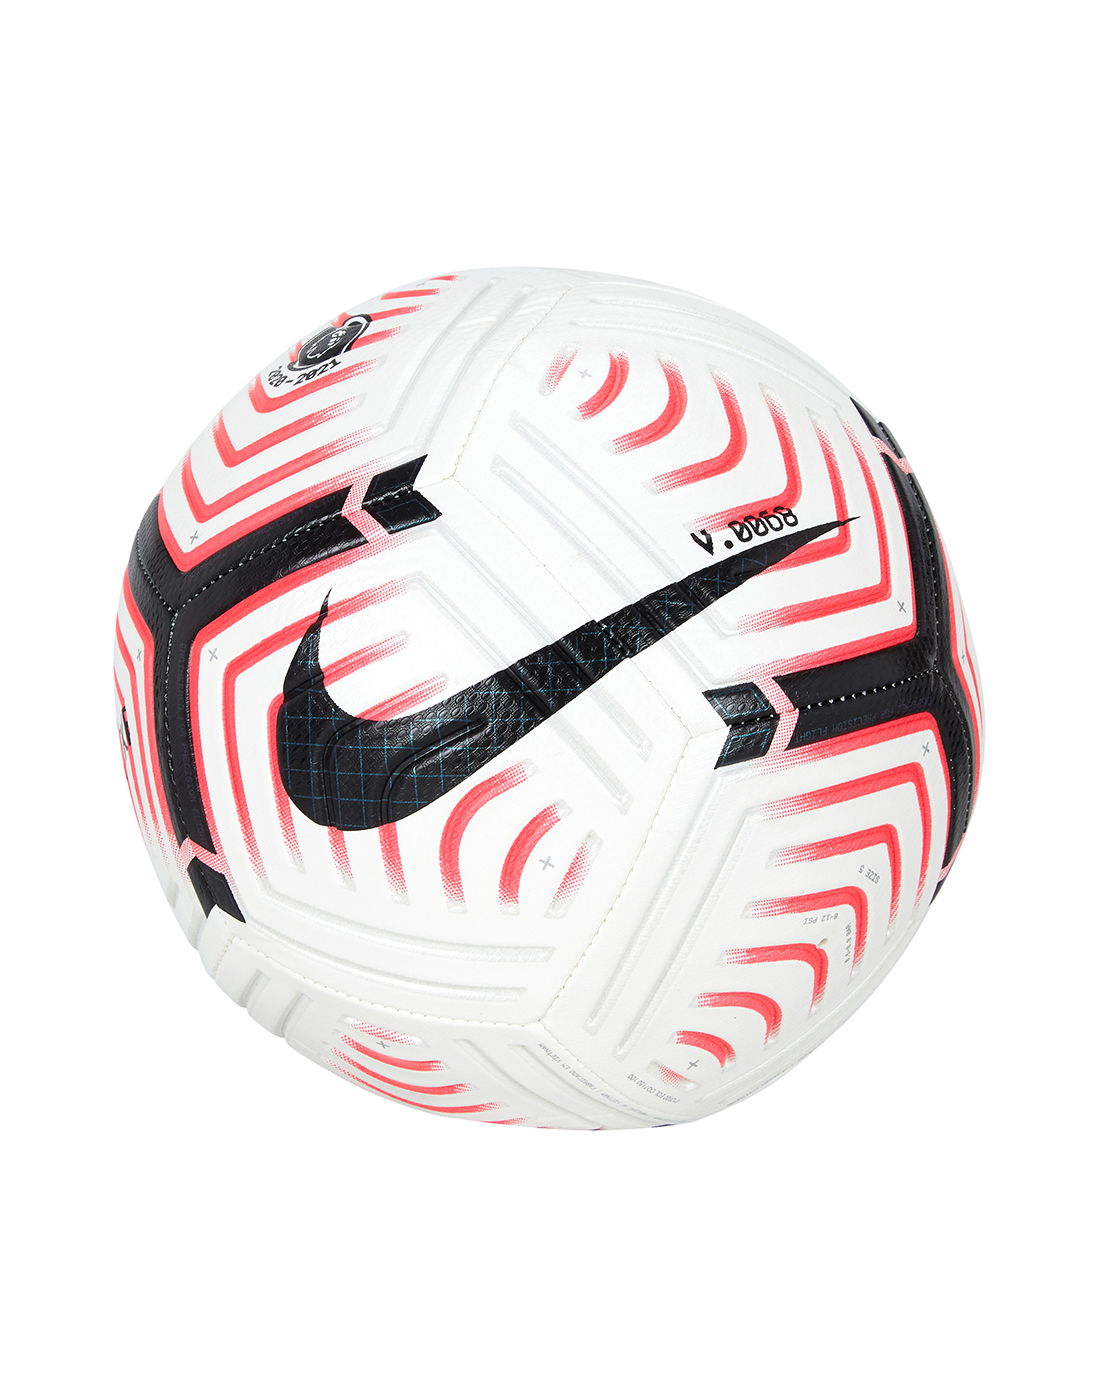 Contrapartida Oblongo Turista Nike Premier League 2020/21 Strike Ball - White | Life Style Sports UK